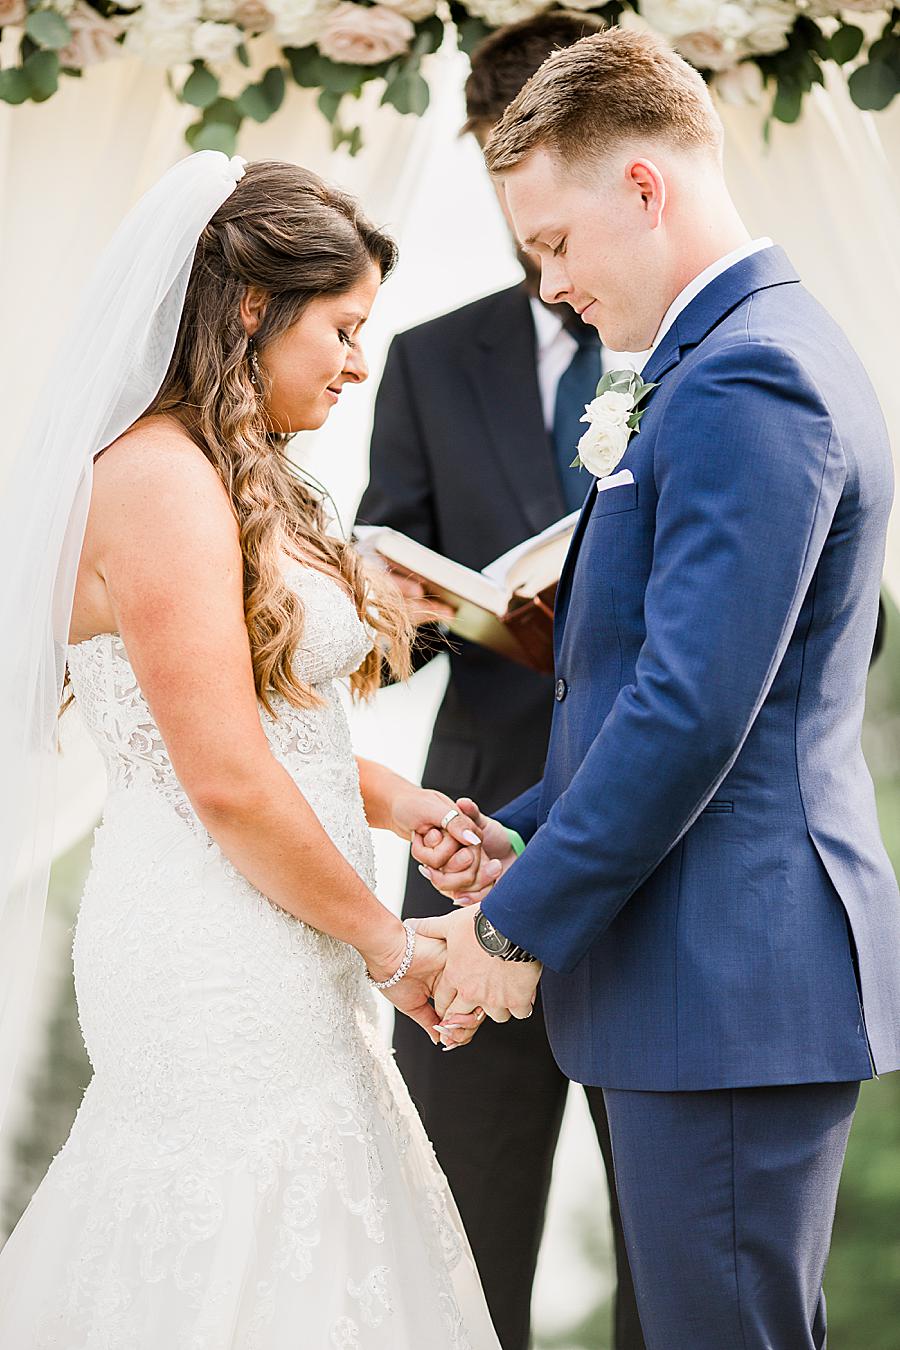 Praying at this WindRiver Wedding Day by Knoxville Wedding Photographer, Amanda May Photos.